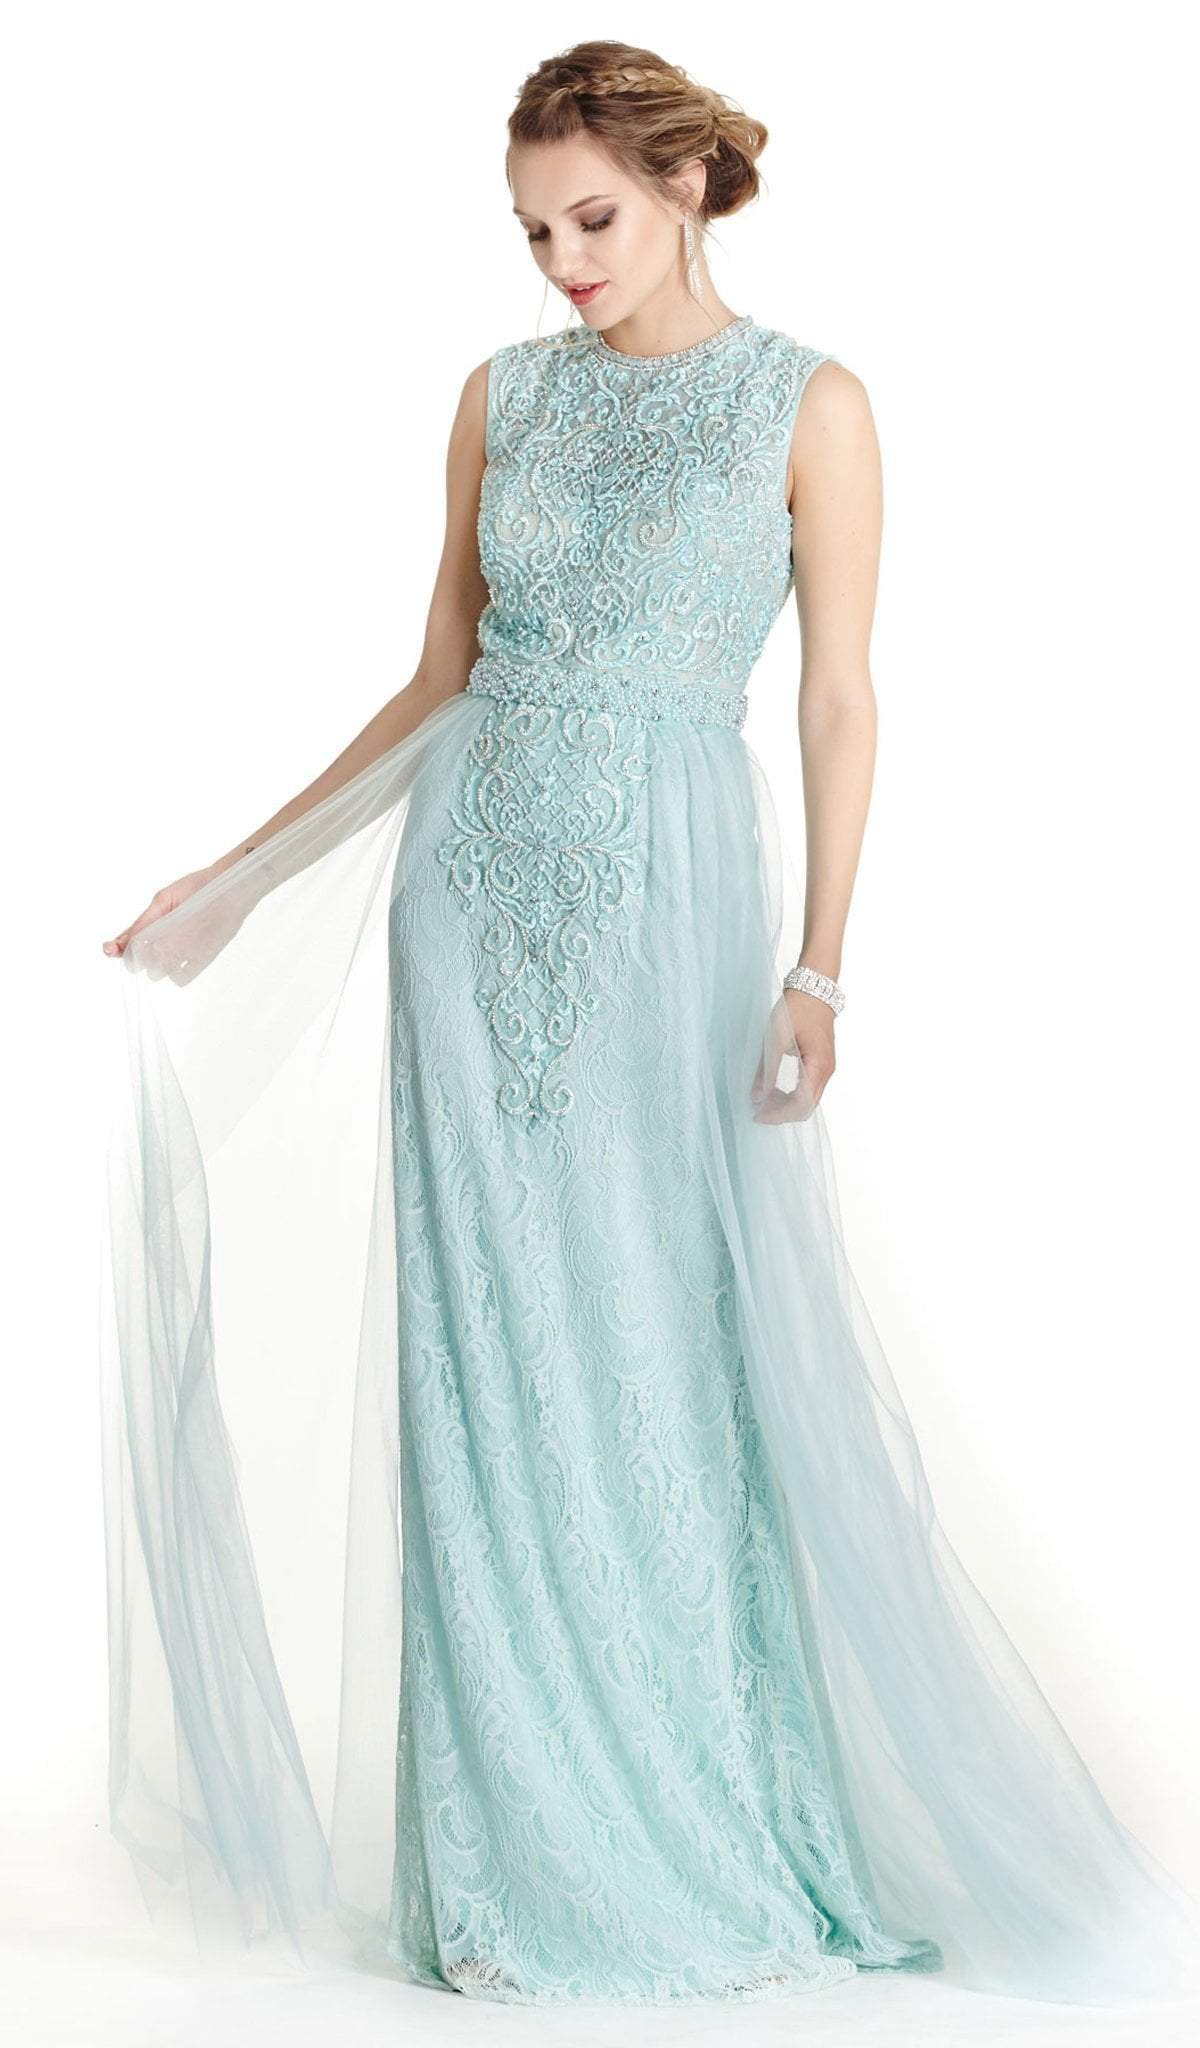 Aspeed Design - Embroidered Jewel Neck A-line Prom Dress
